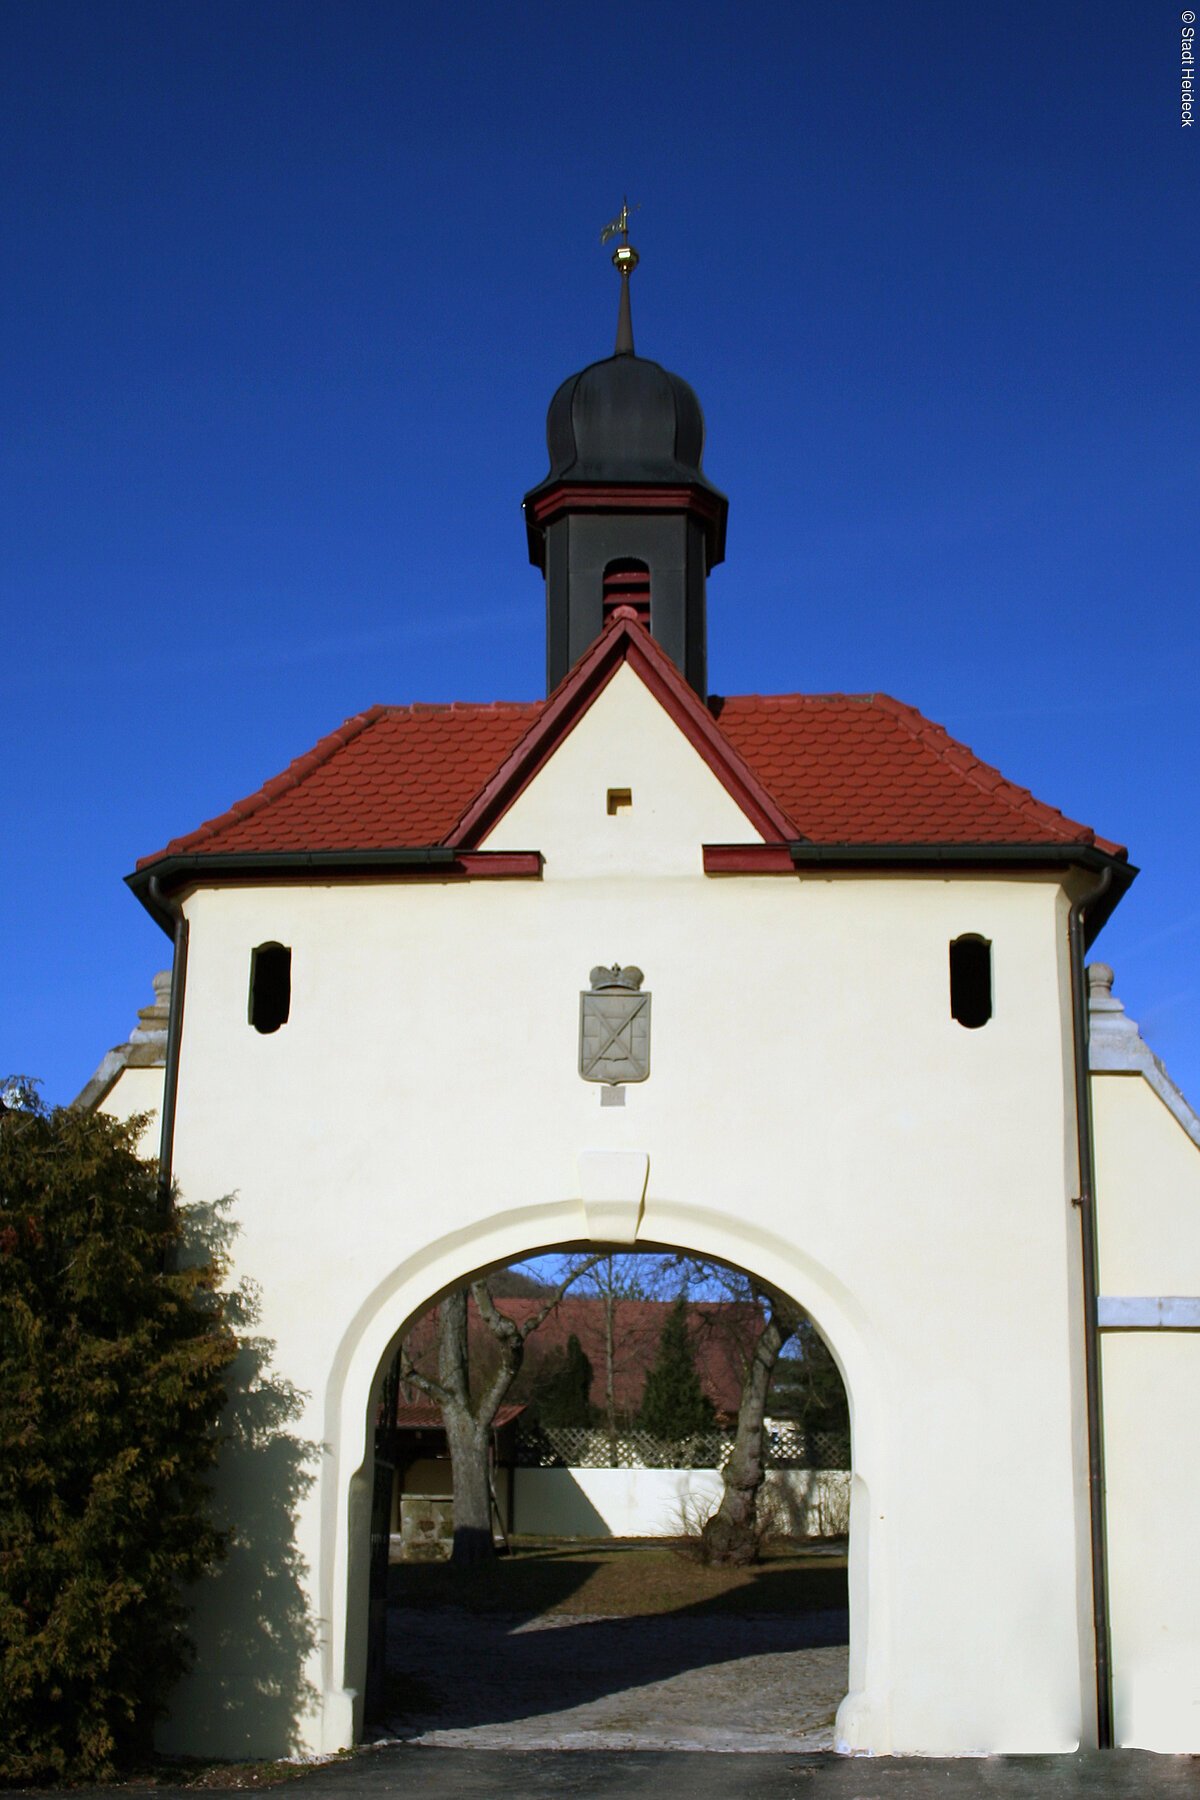 Torbogen Schloss Kreuth